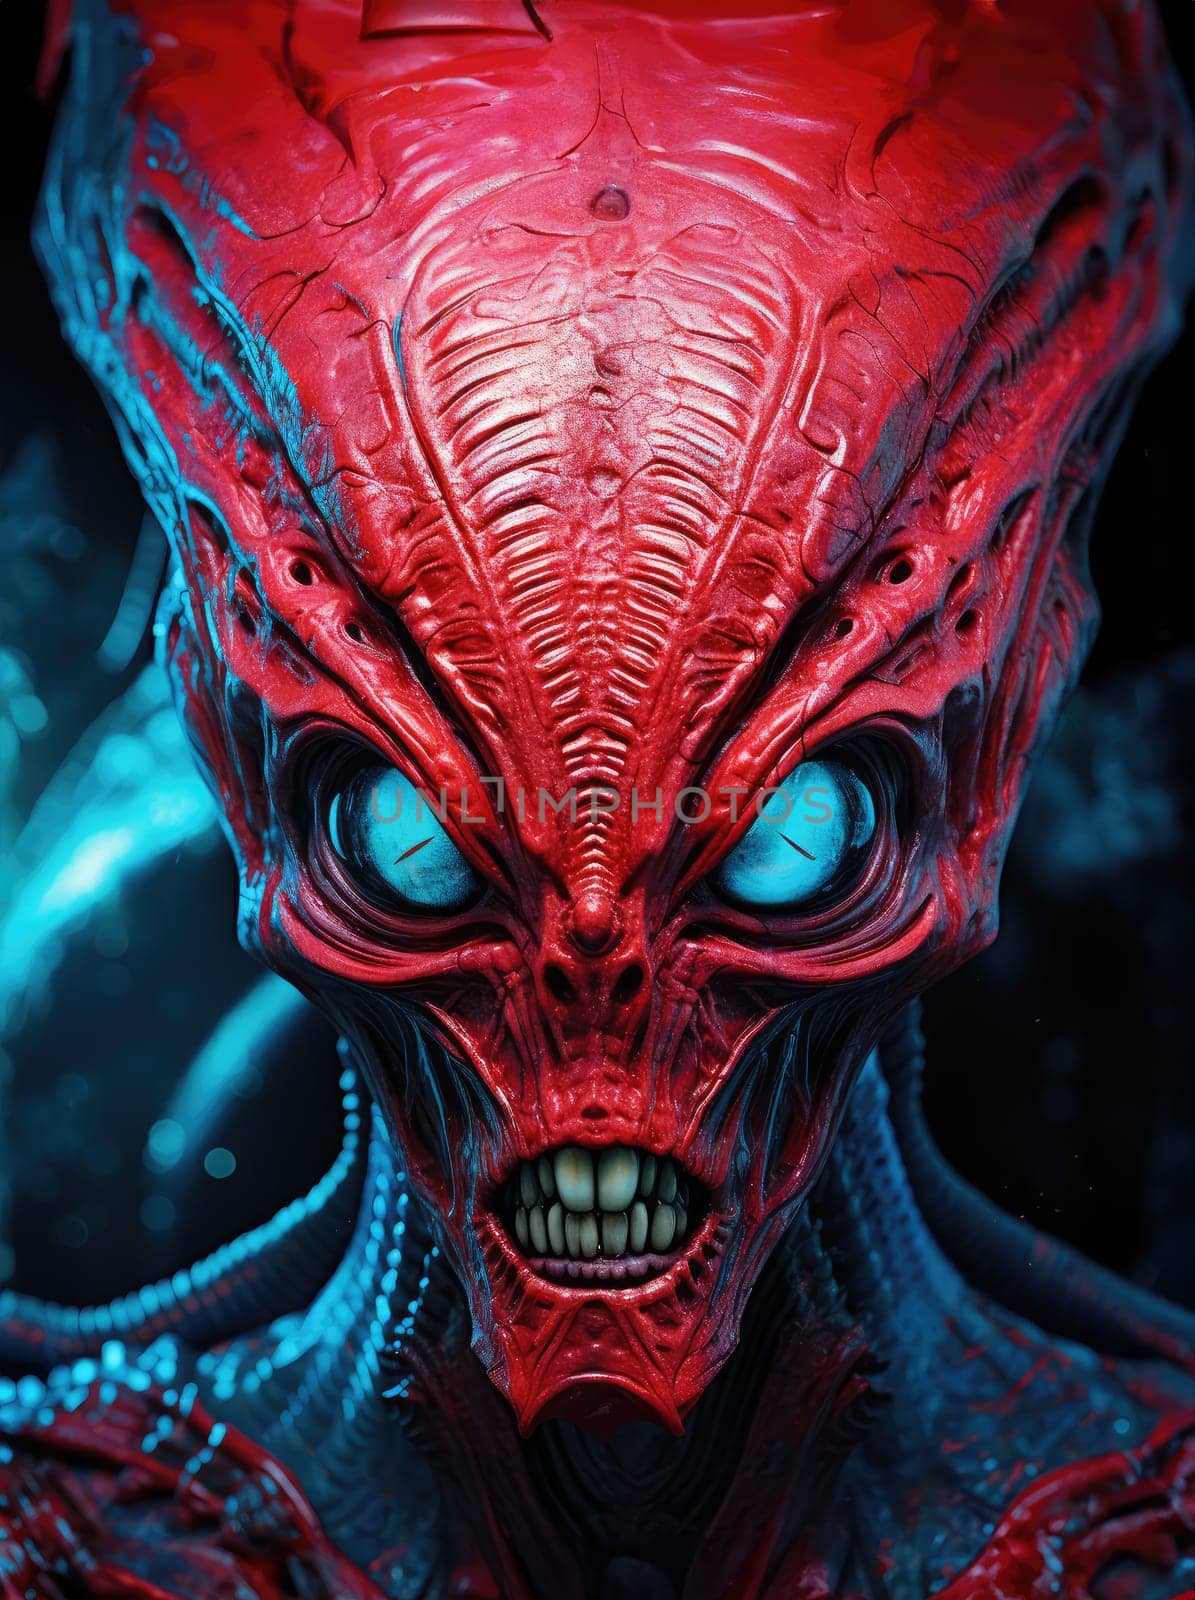 Portrait of a humanoid alien creature. Science fiction illustration